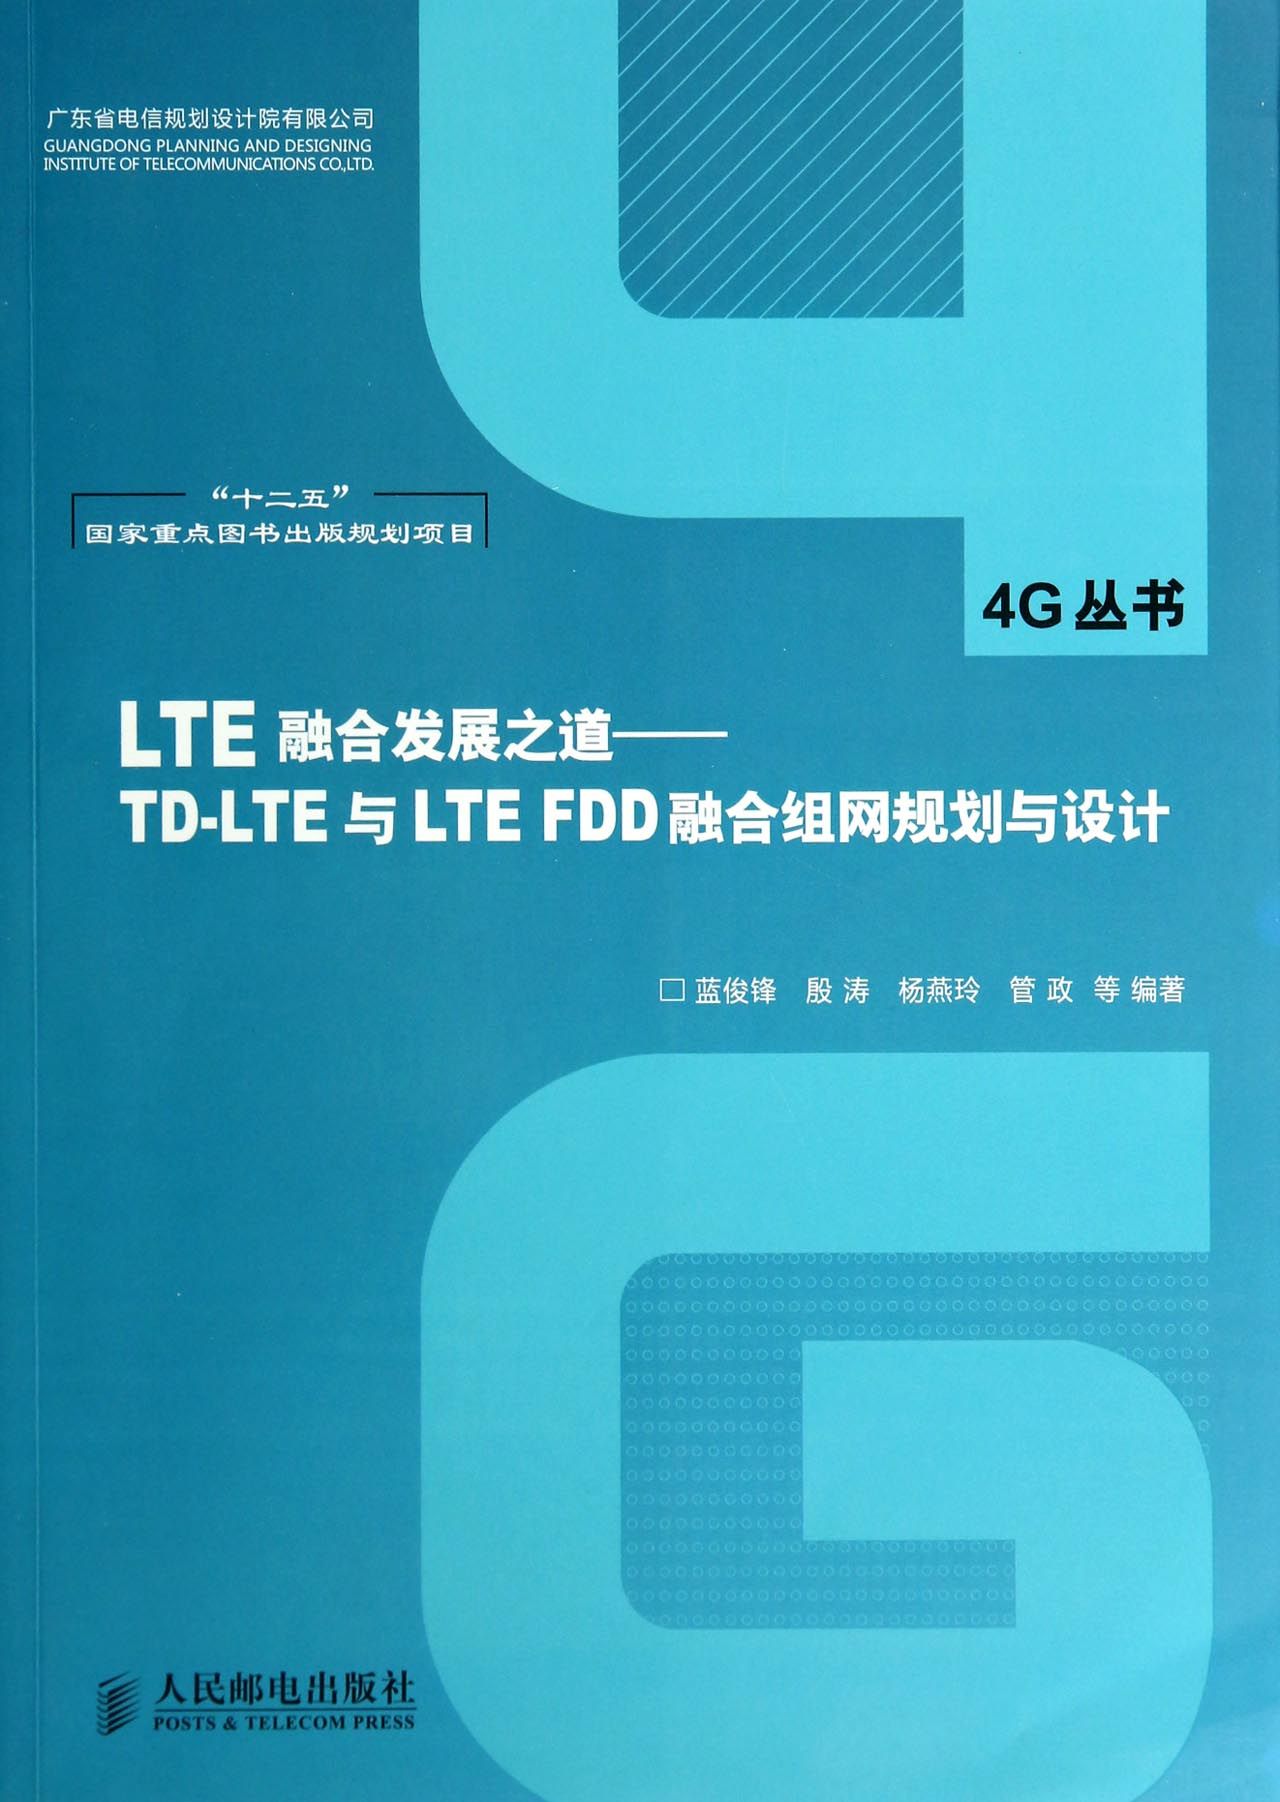 LTE融合发展之道--TD-LTE与LTE FDD融合组网规划与设计/4G丛书截图